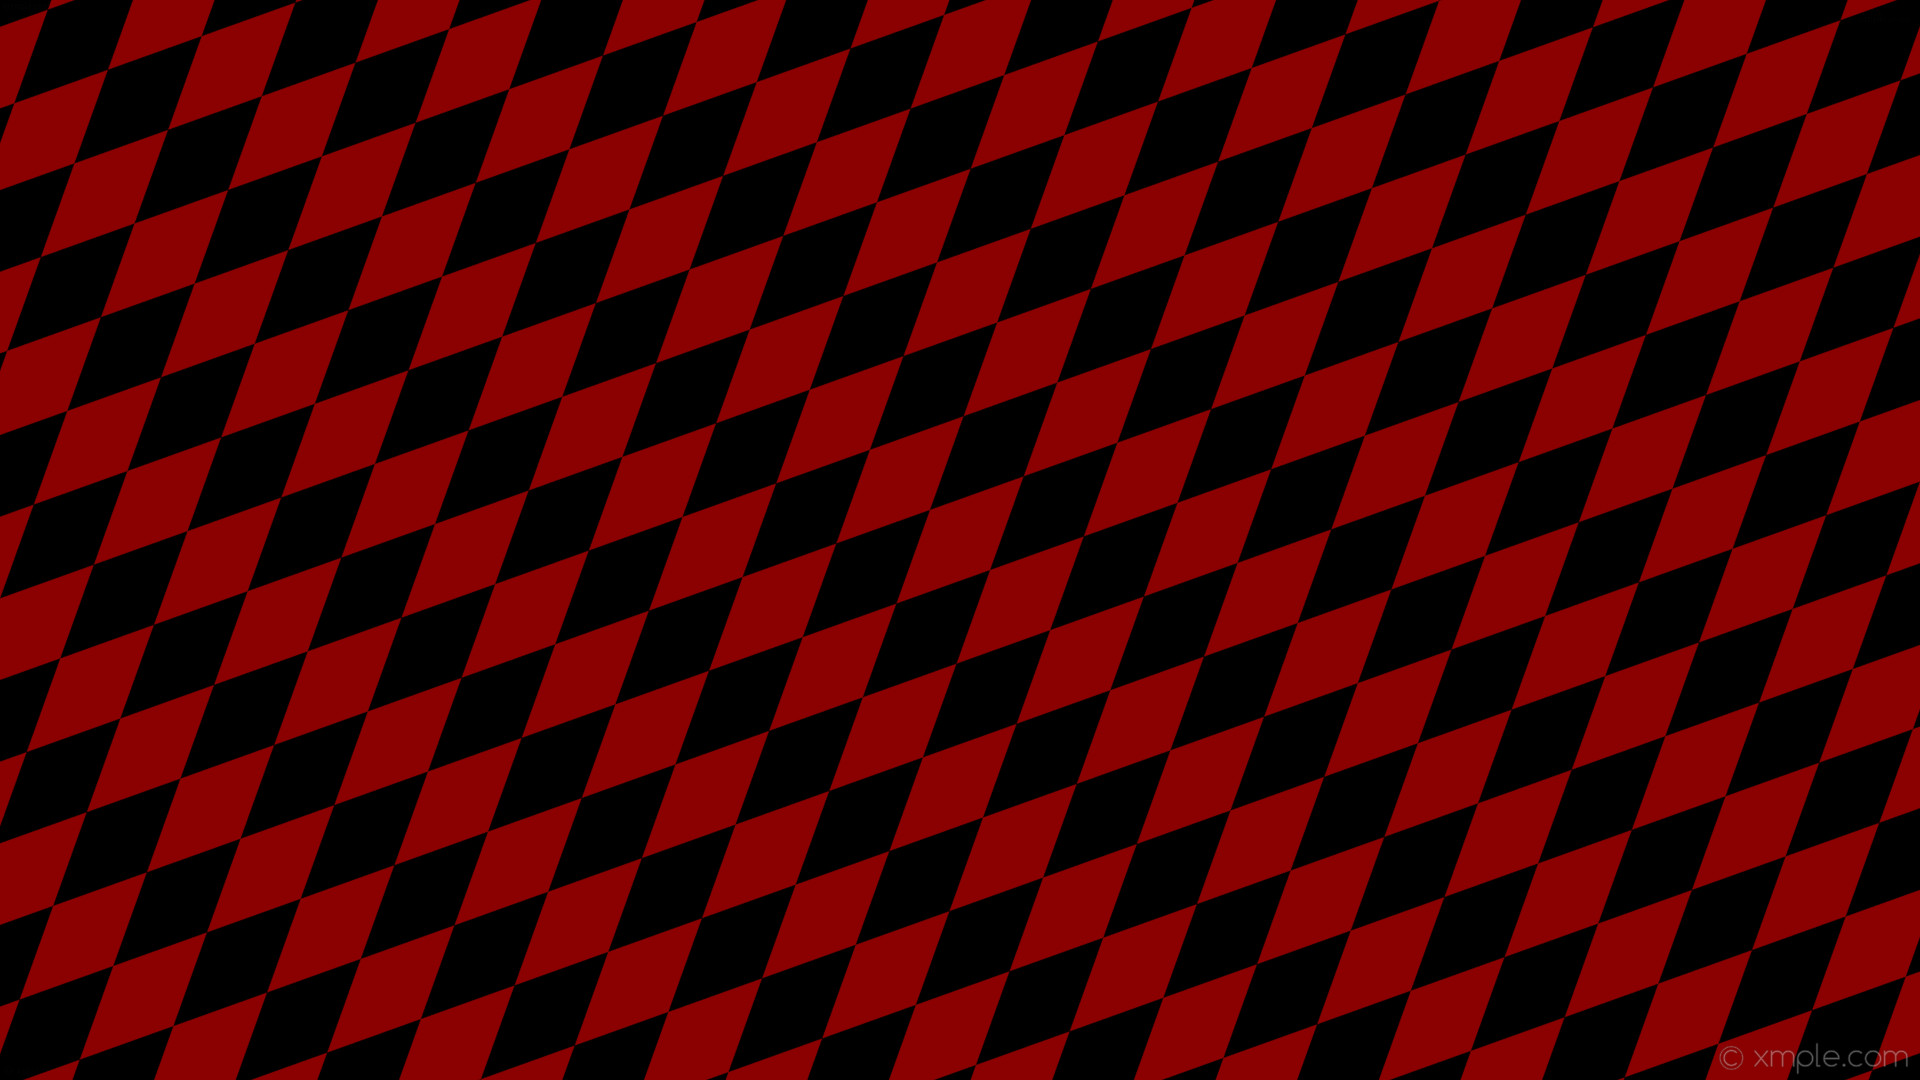 1920x1080 wallpaper black diamond red lozenge rhombus dark red #8b0000 #000000 45Â°  180px 85px